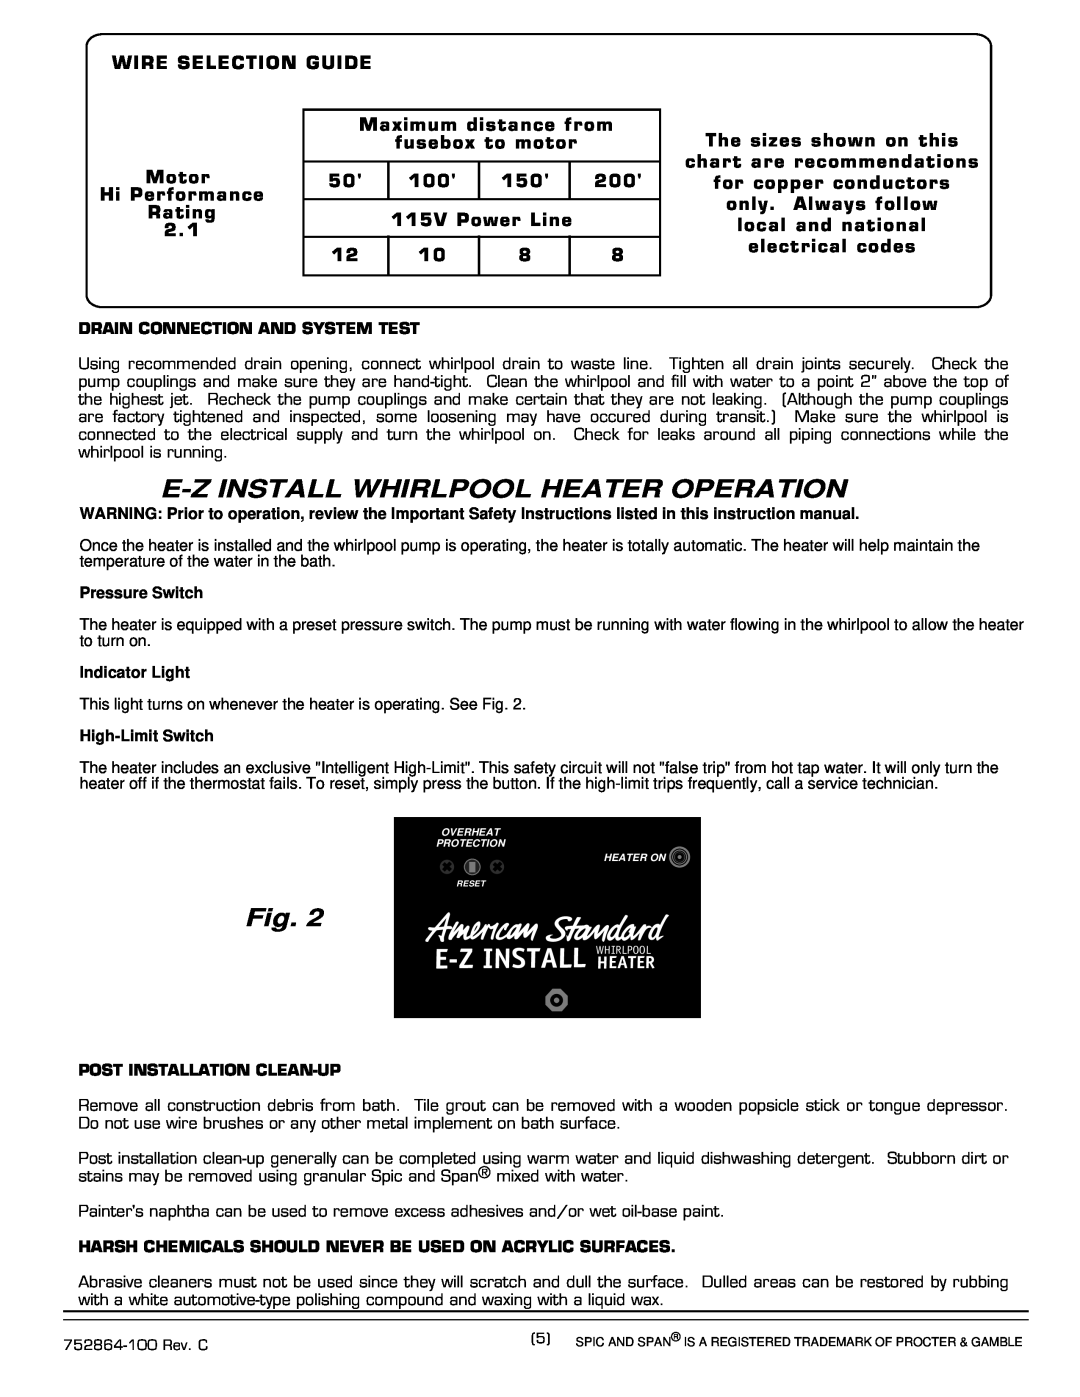 American Standard 6060E SERIES installation instructions E-Z Install Whirlpool Heater Operation 